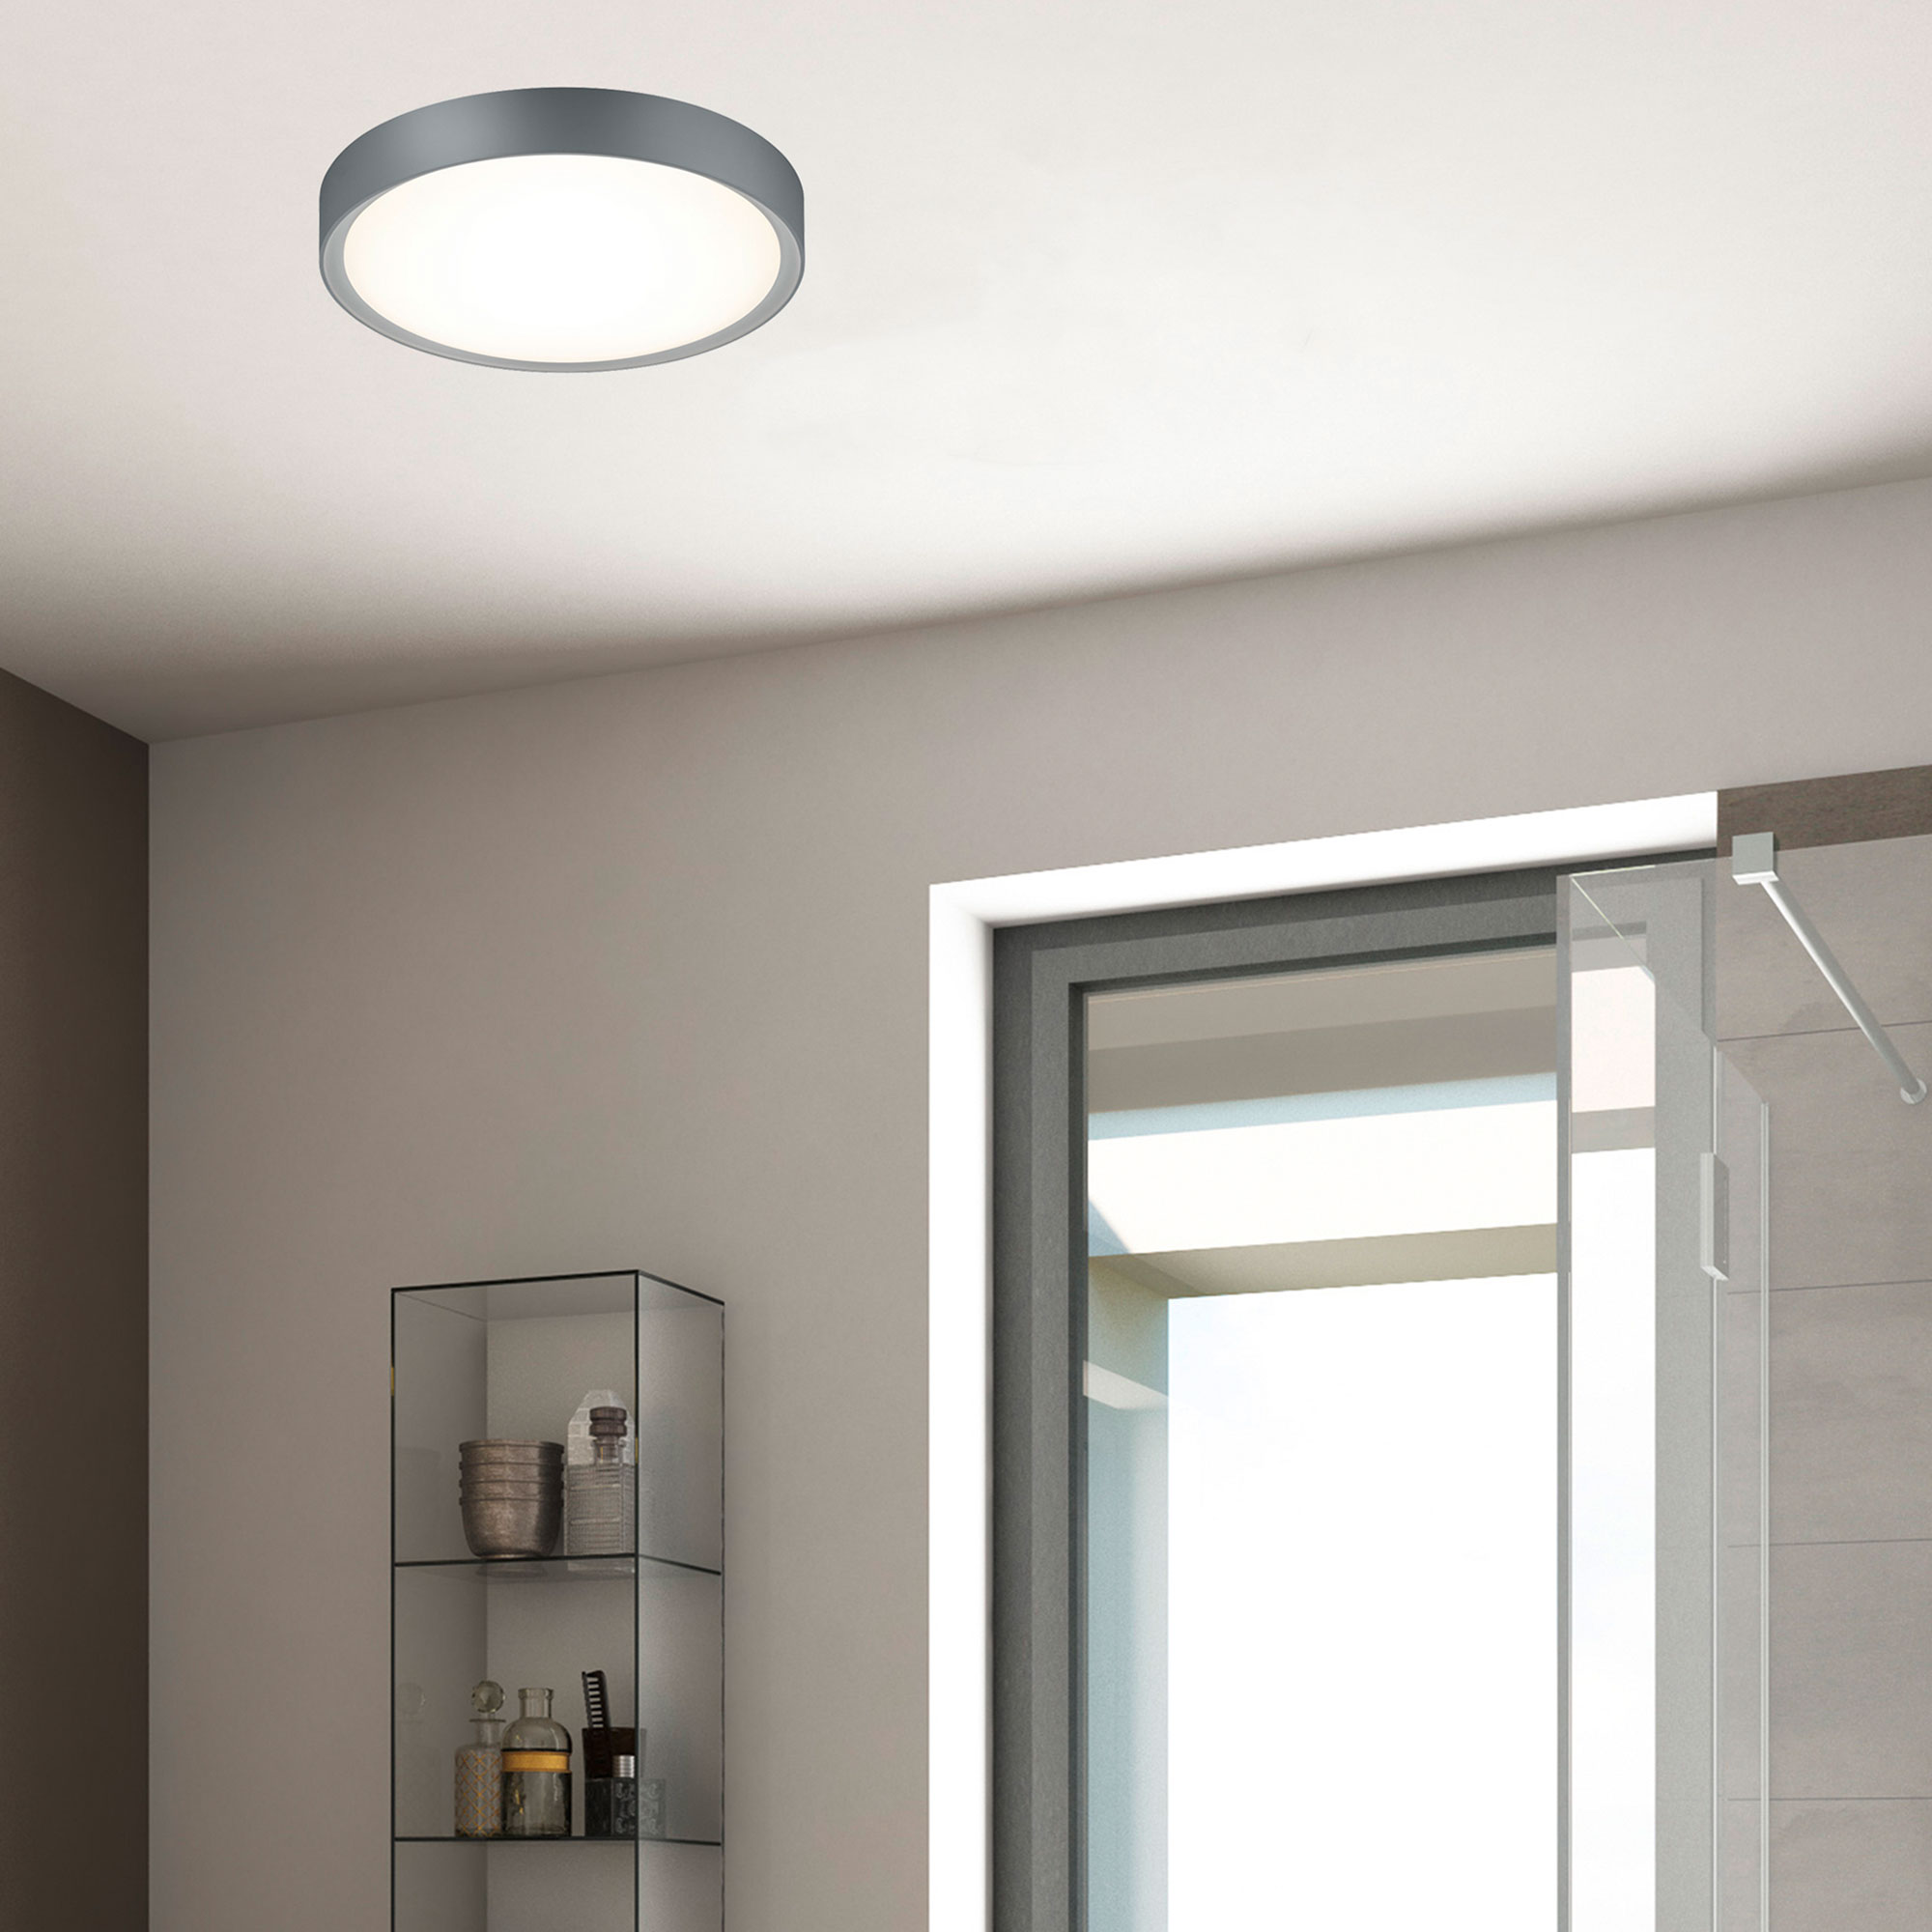 klein Ongemak Veilig TRIO Clarimo LED ceiling light - 659011887 | REUTER